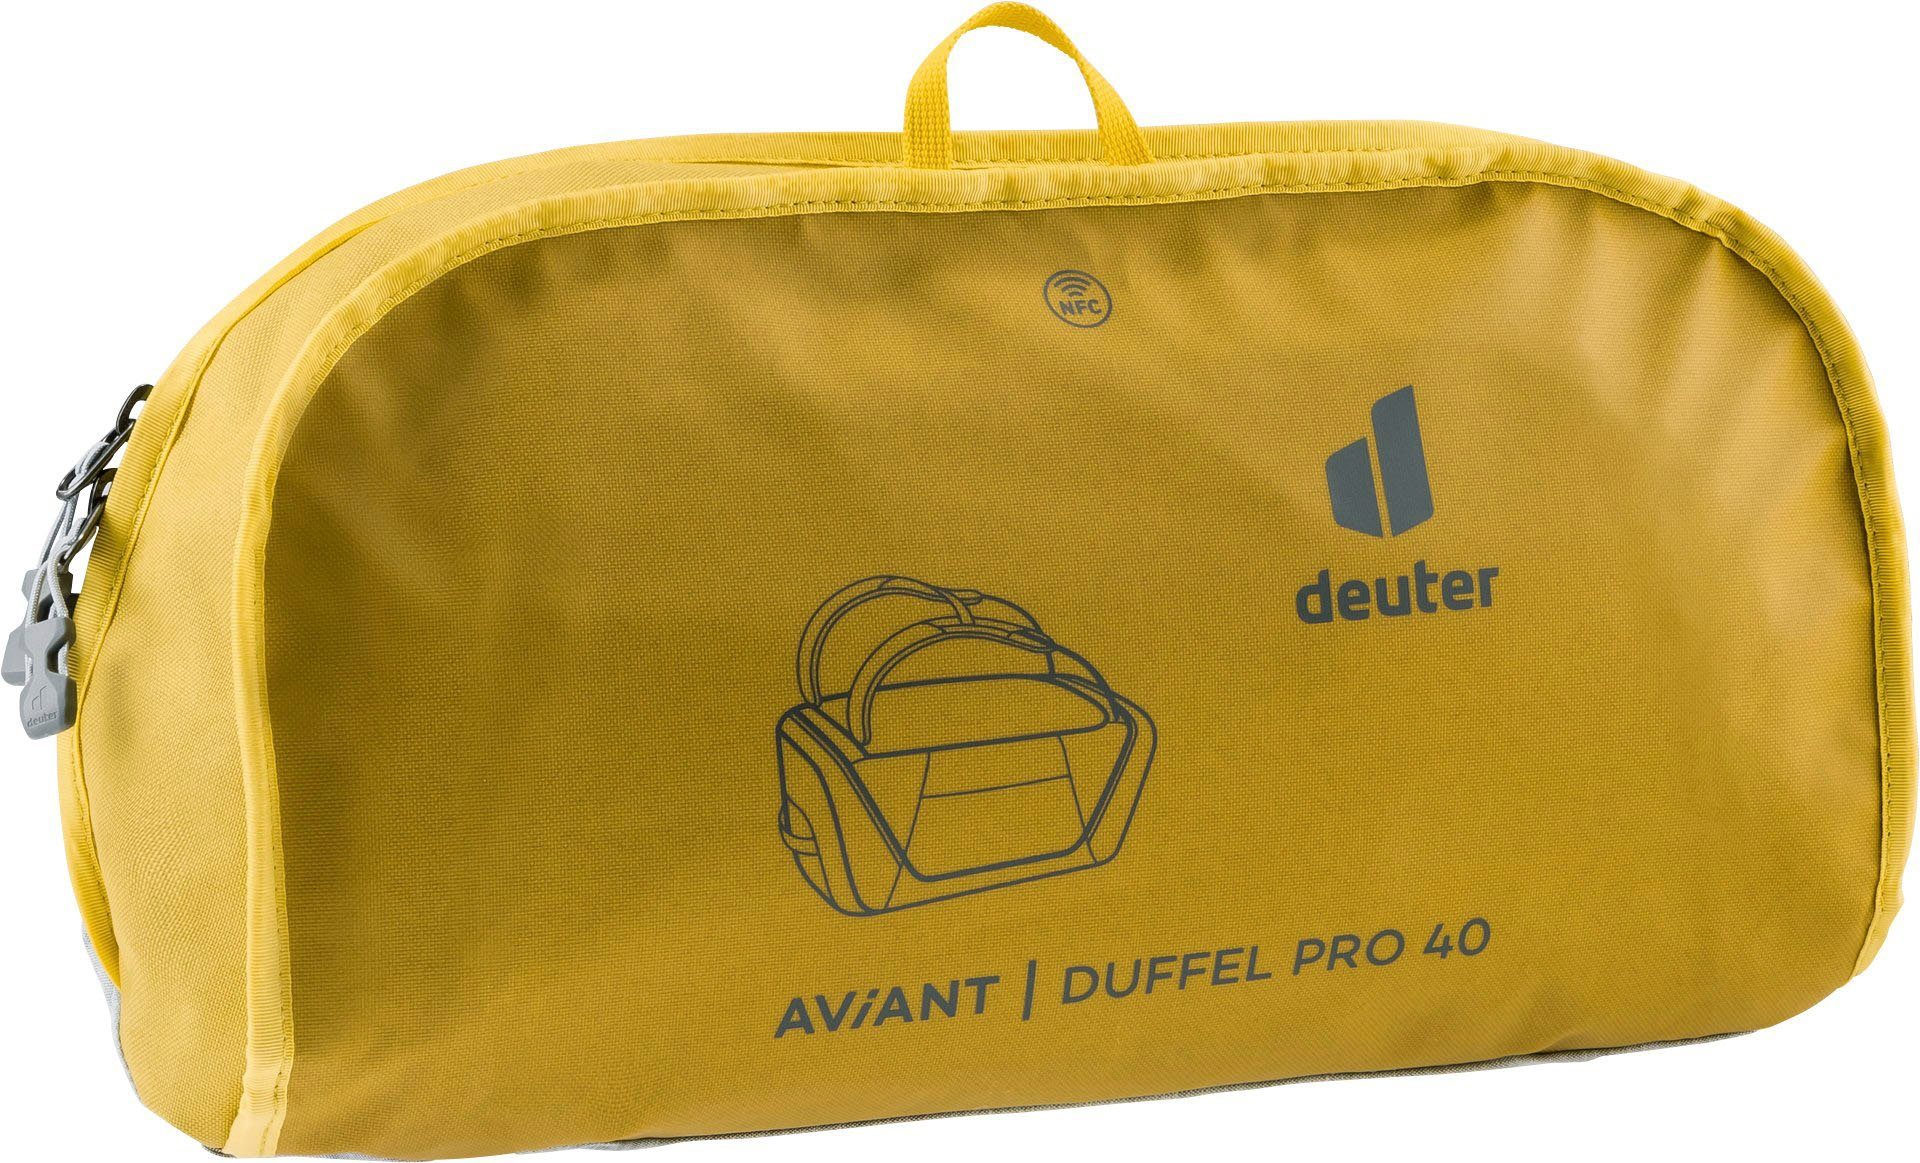 AViANT Duffel Reisetasche 40 Pro gelb deuter